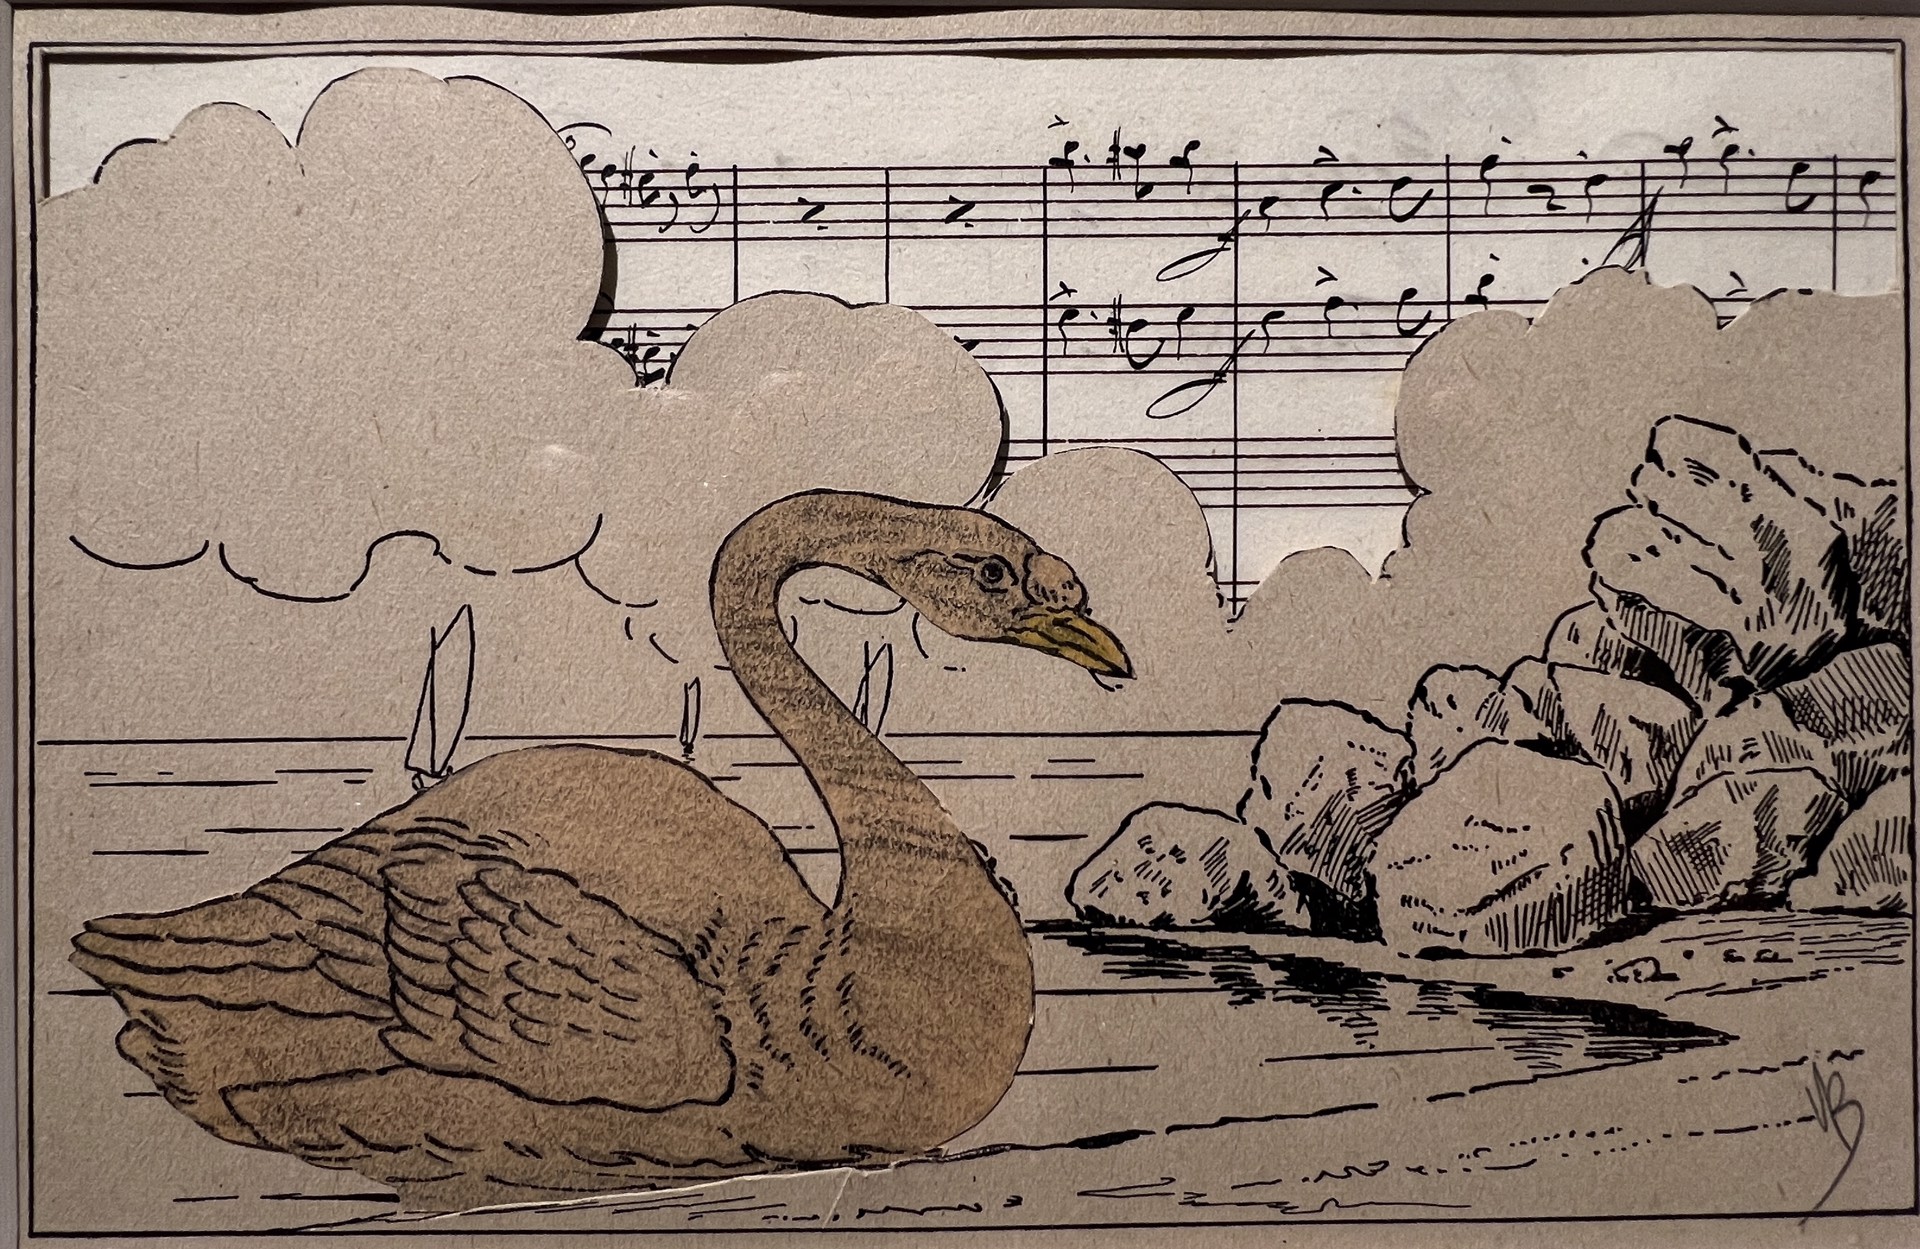 Musical Swan Scape by Varujan Boghosian